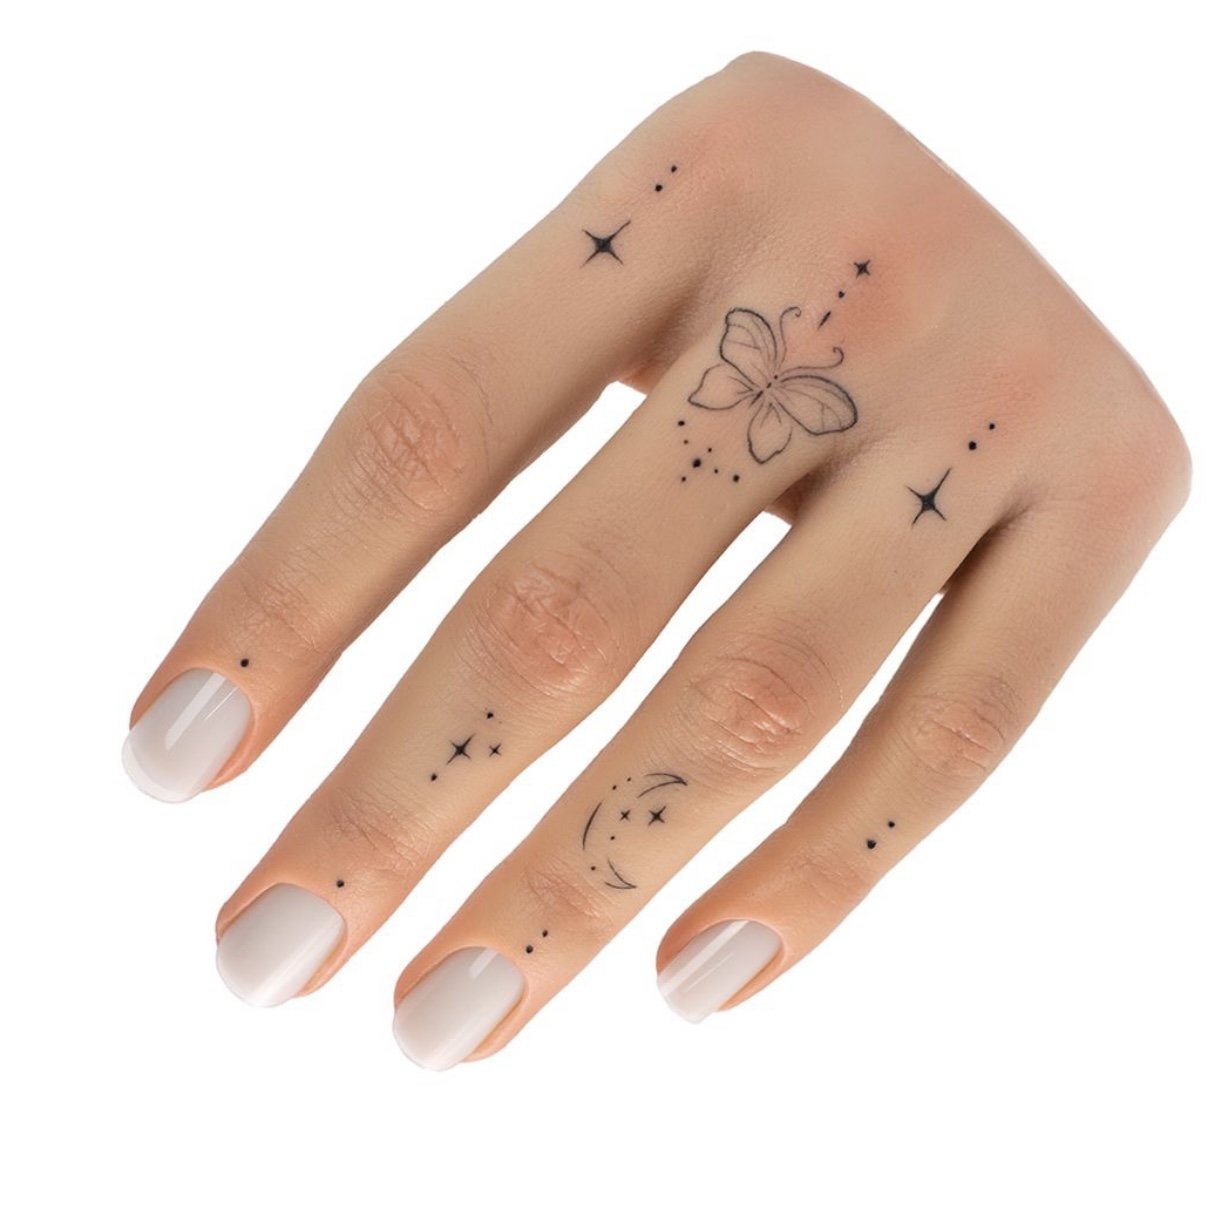 Hand Tattoo Ideas for Girls - Best Female Hand Tattoos | Positivefox.com | Hand  tattoos for women, Finger tattoo for women, Tattoos for women